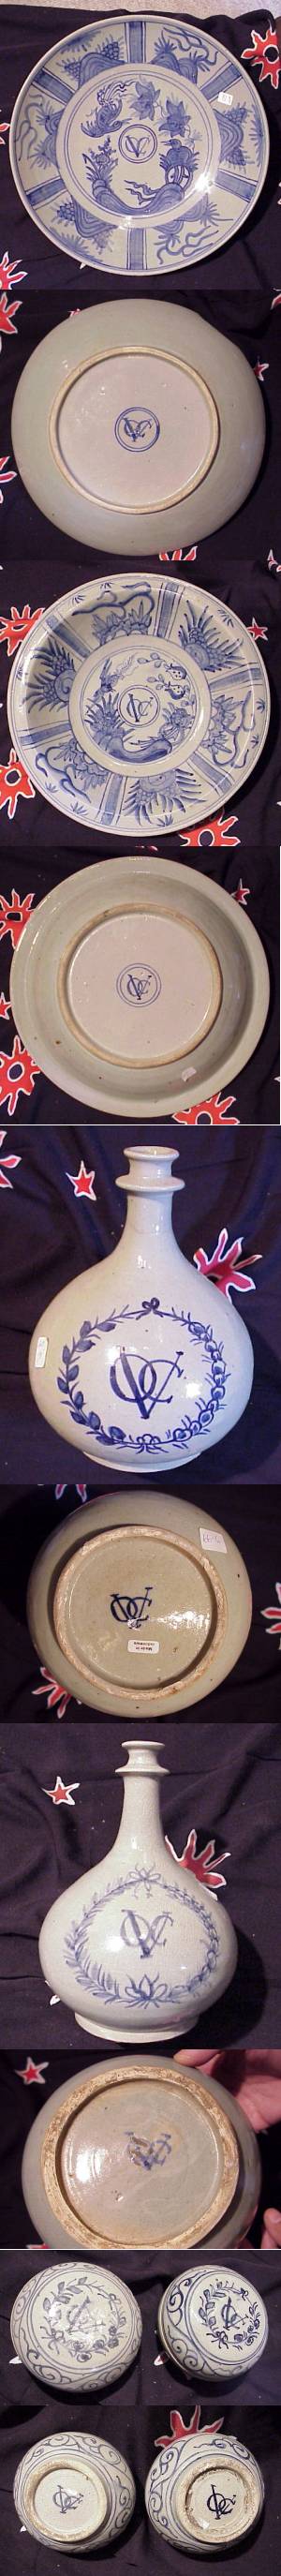 Porcelain with VOC mark